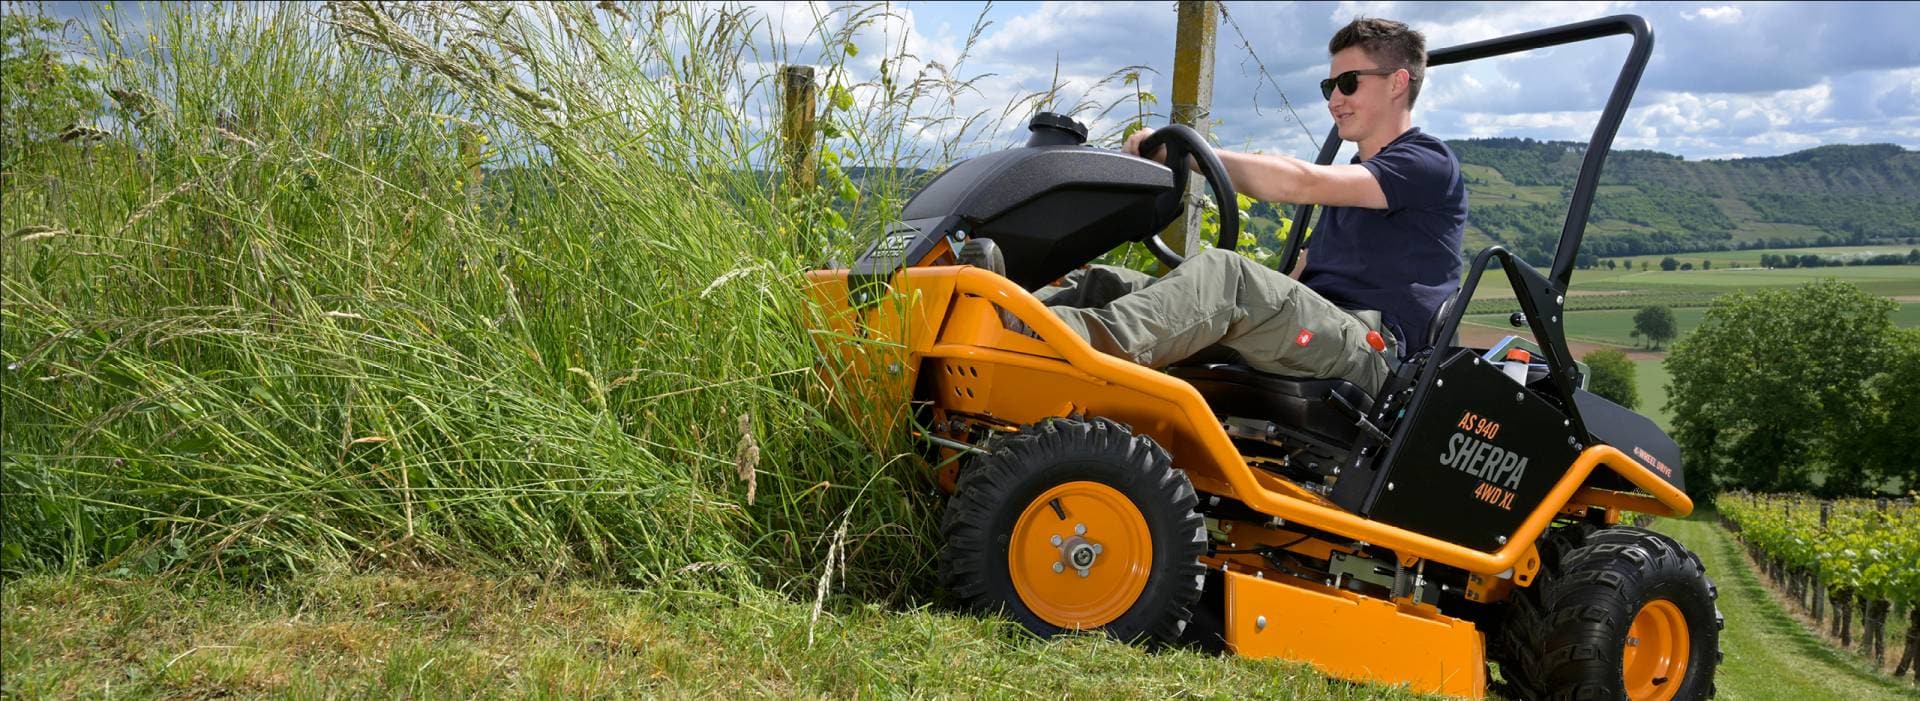 Rasenmäher-Traktor für Kreislehrgarten in Amerang – Samerberger